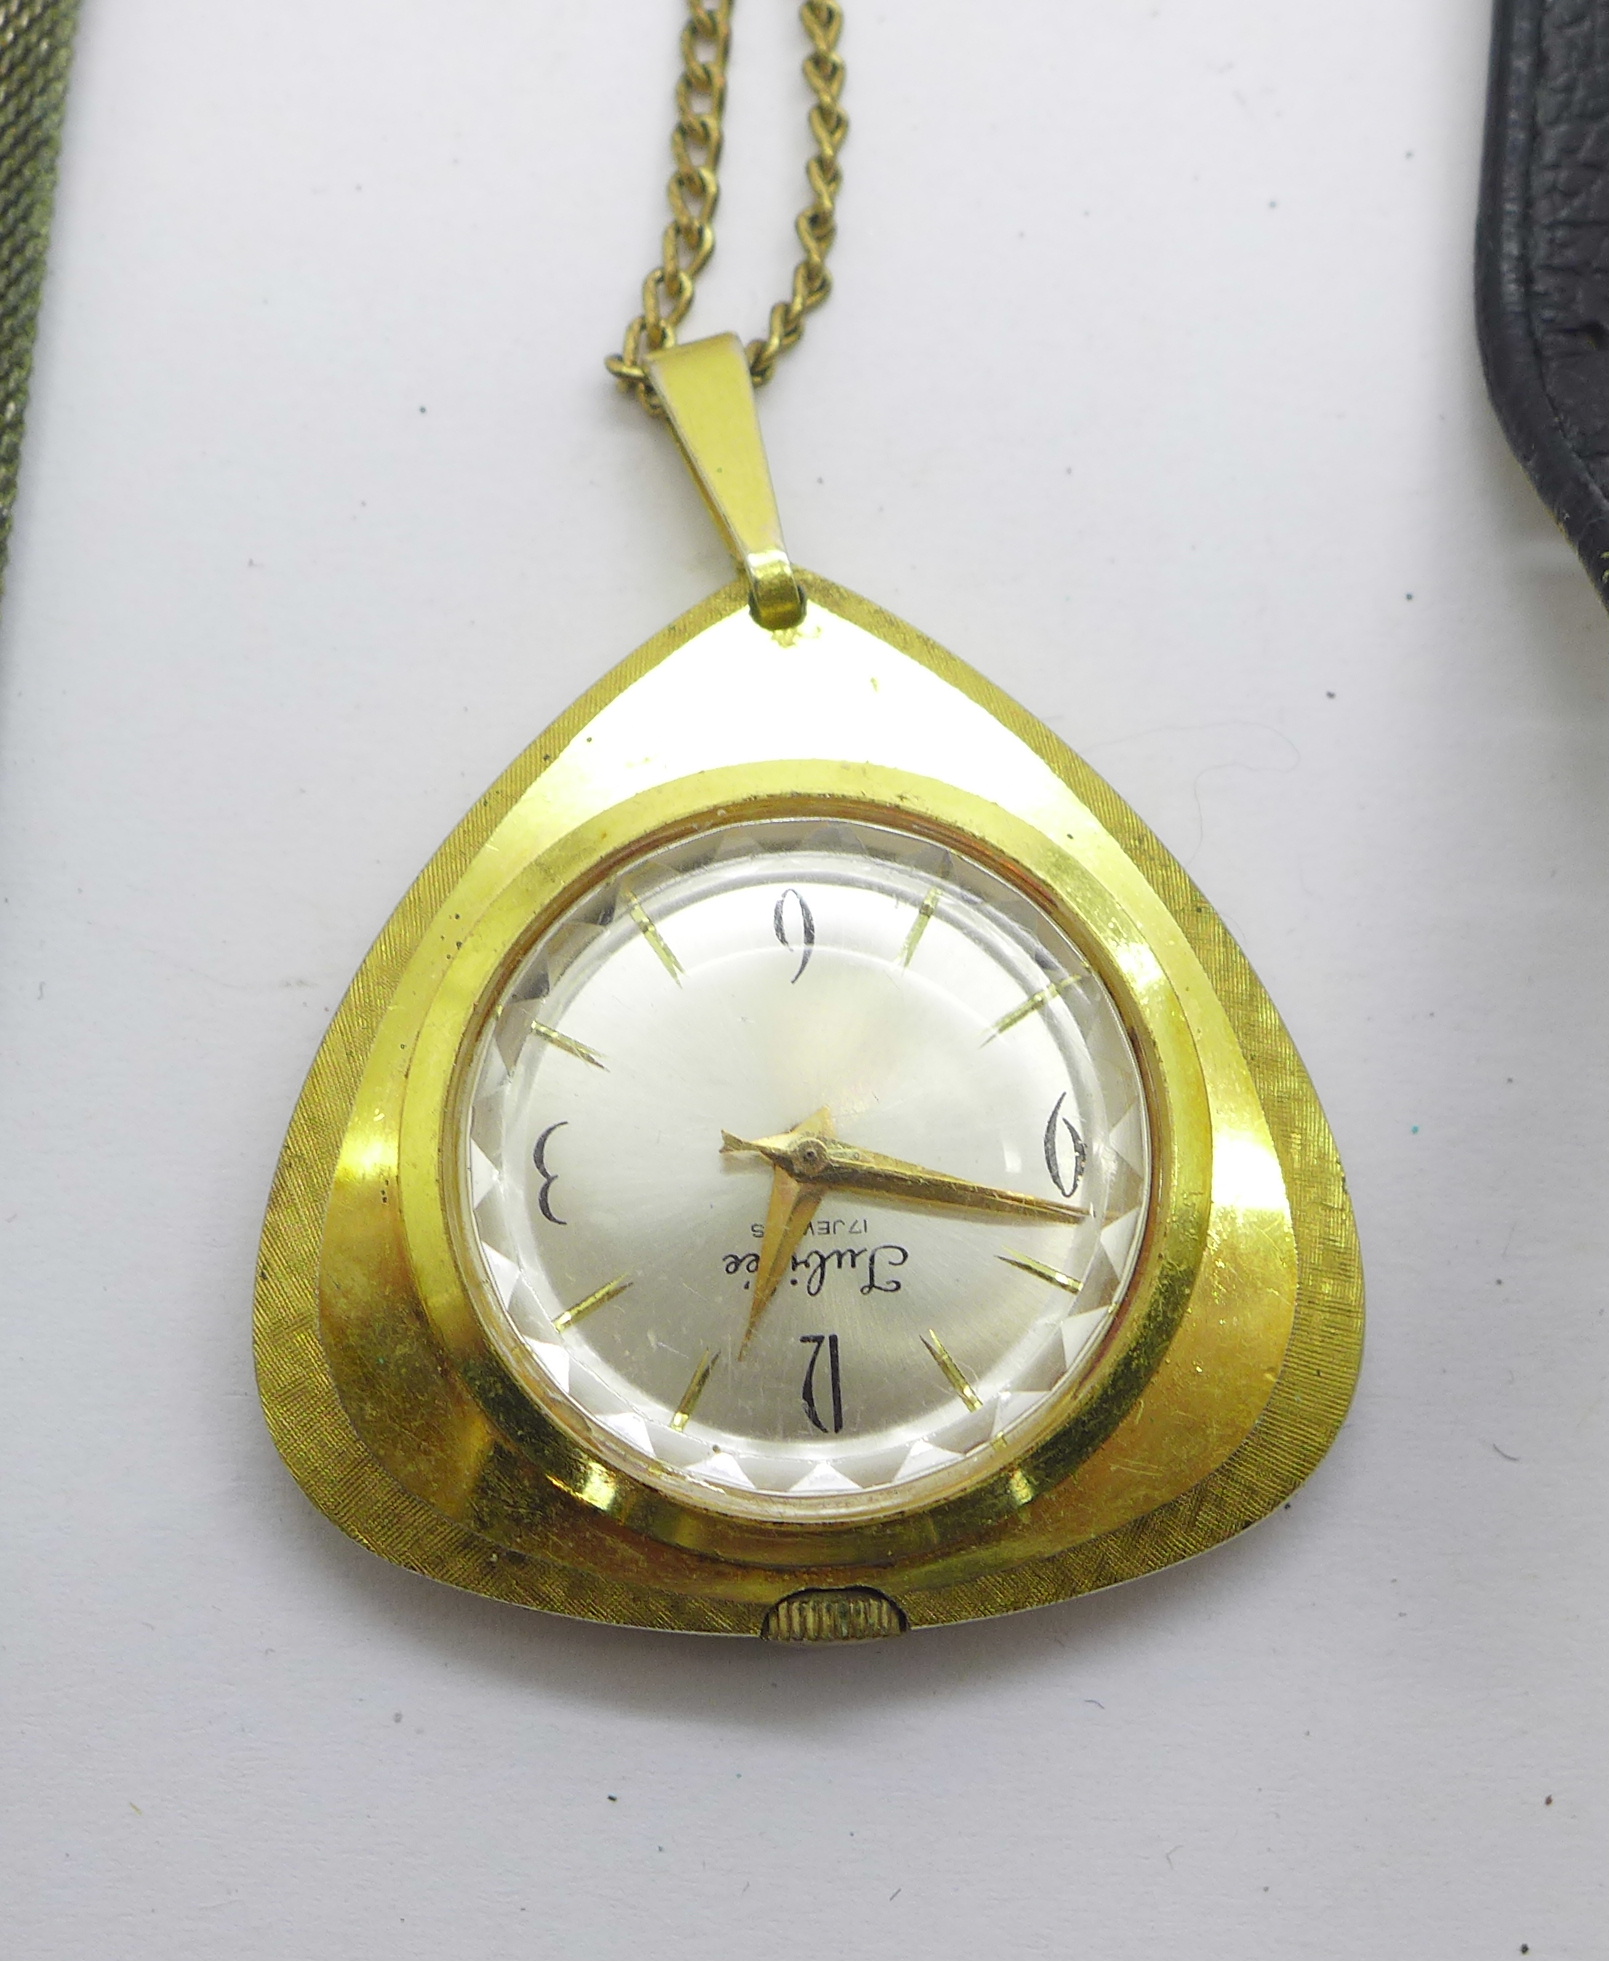 Fourteen manual wind wristwatches and pendant watches including Buler, Bifora, Smiths, etc. - Bild 6 aus 6